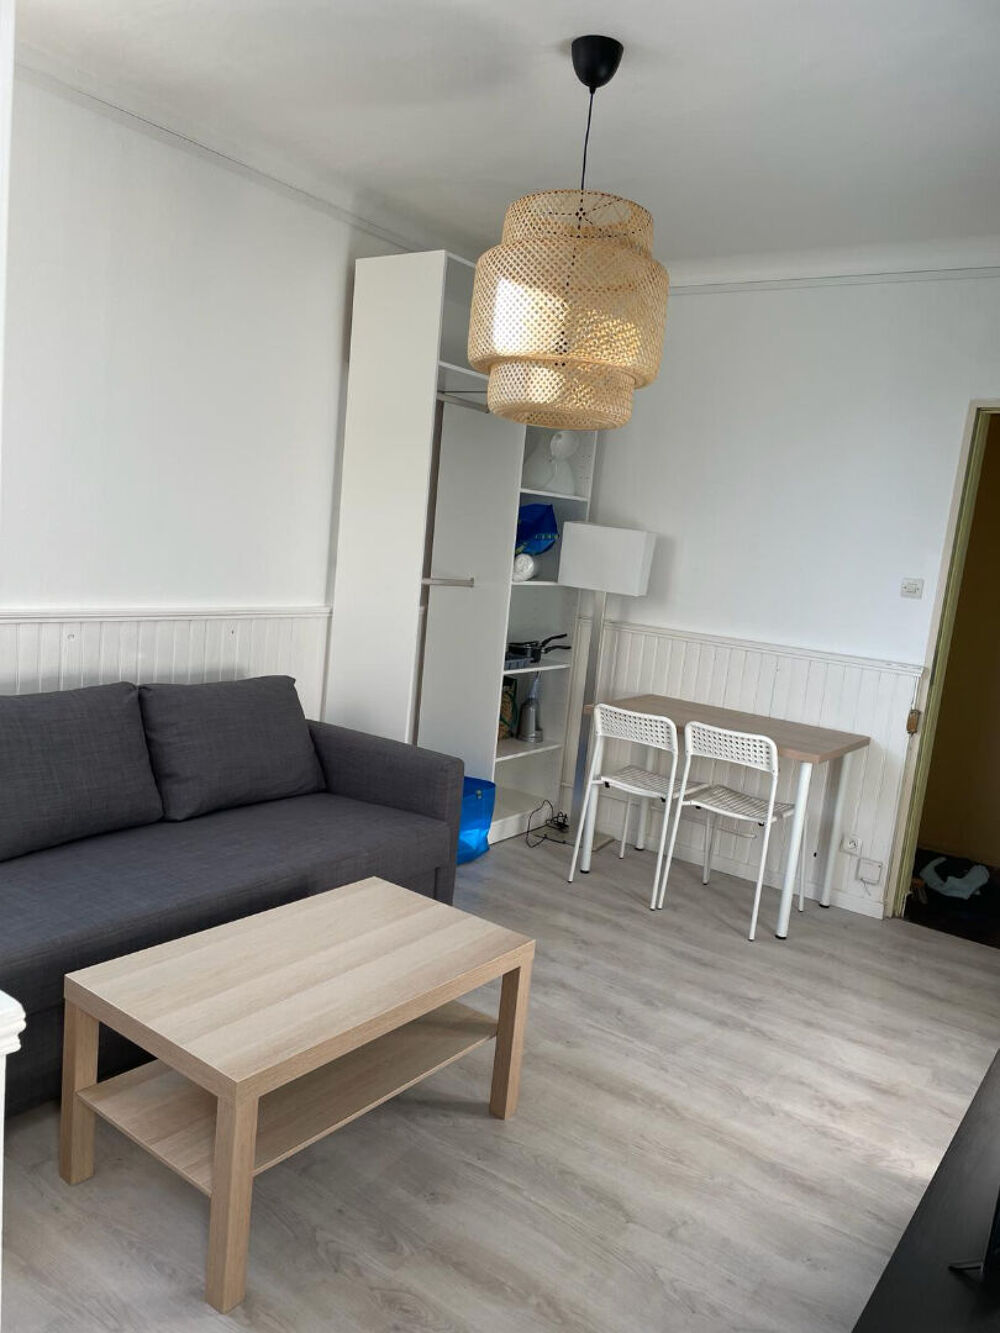 Vente Appartement CAEN : appartement F1 (17,51 m Carrez)  vendre Caen